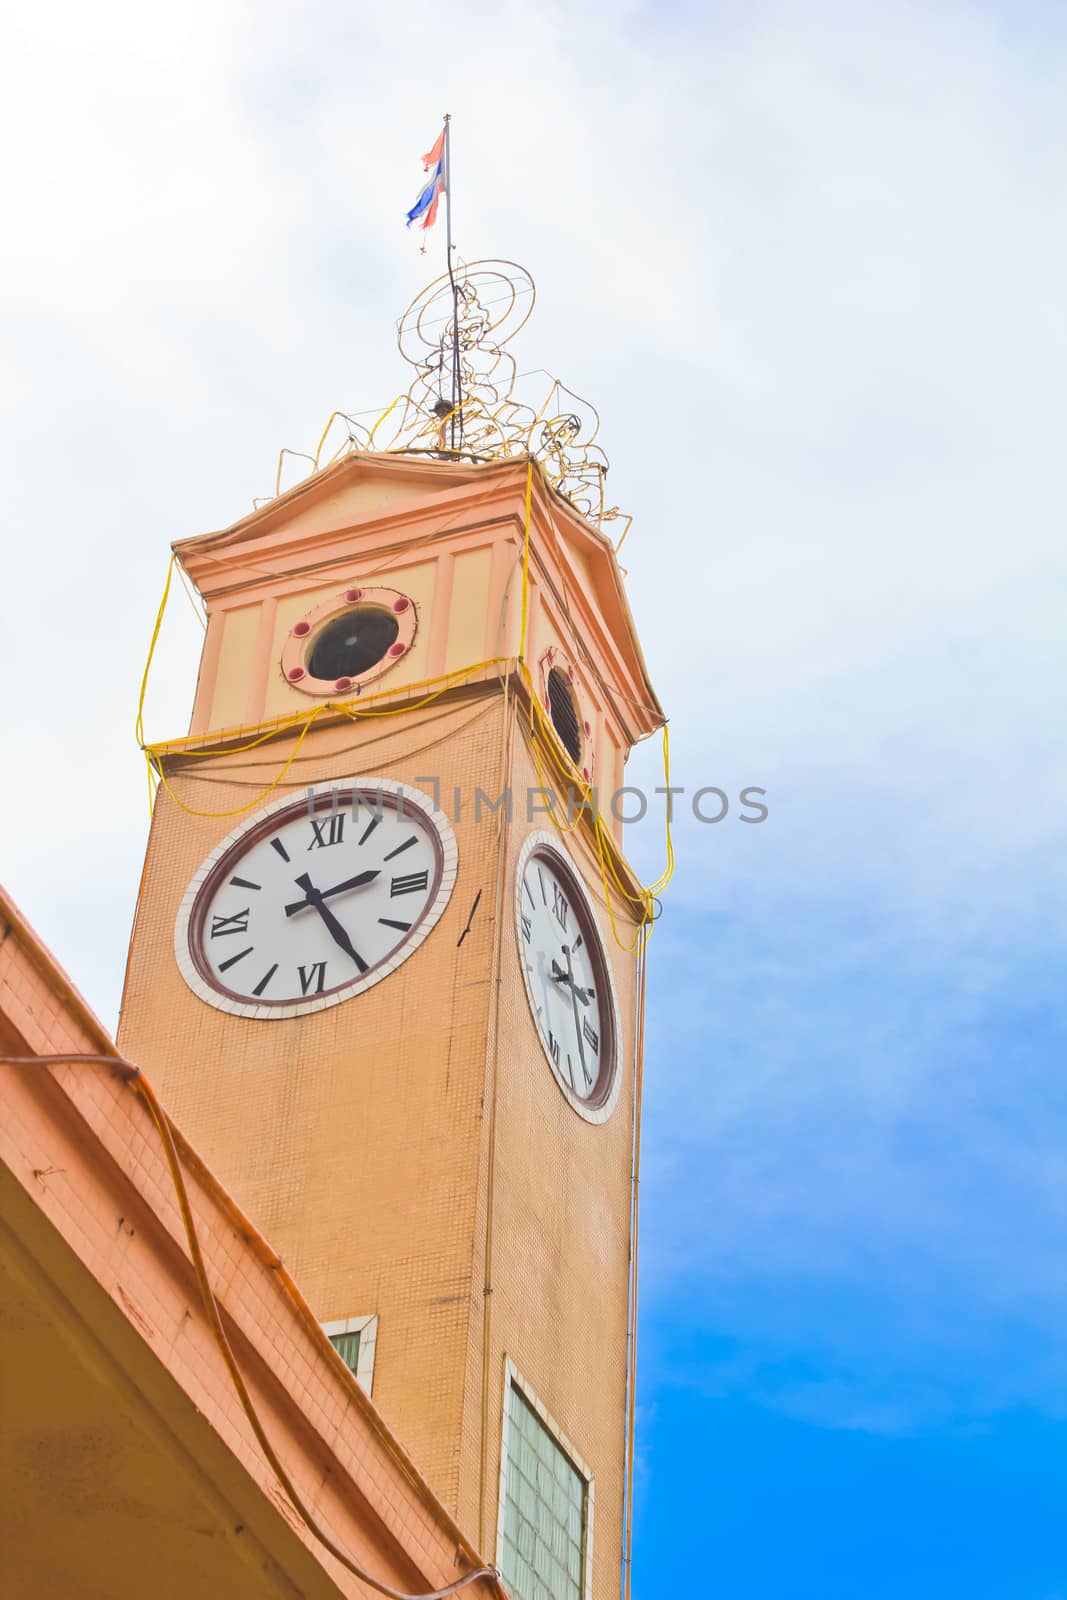 Vietnamese memorial clock tower is built in Thailand.